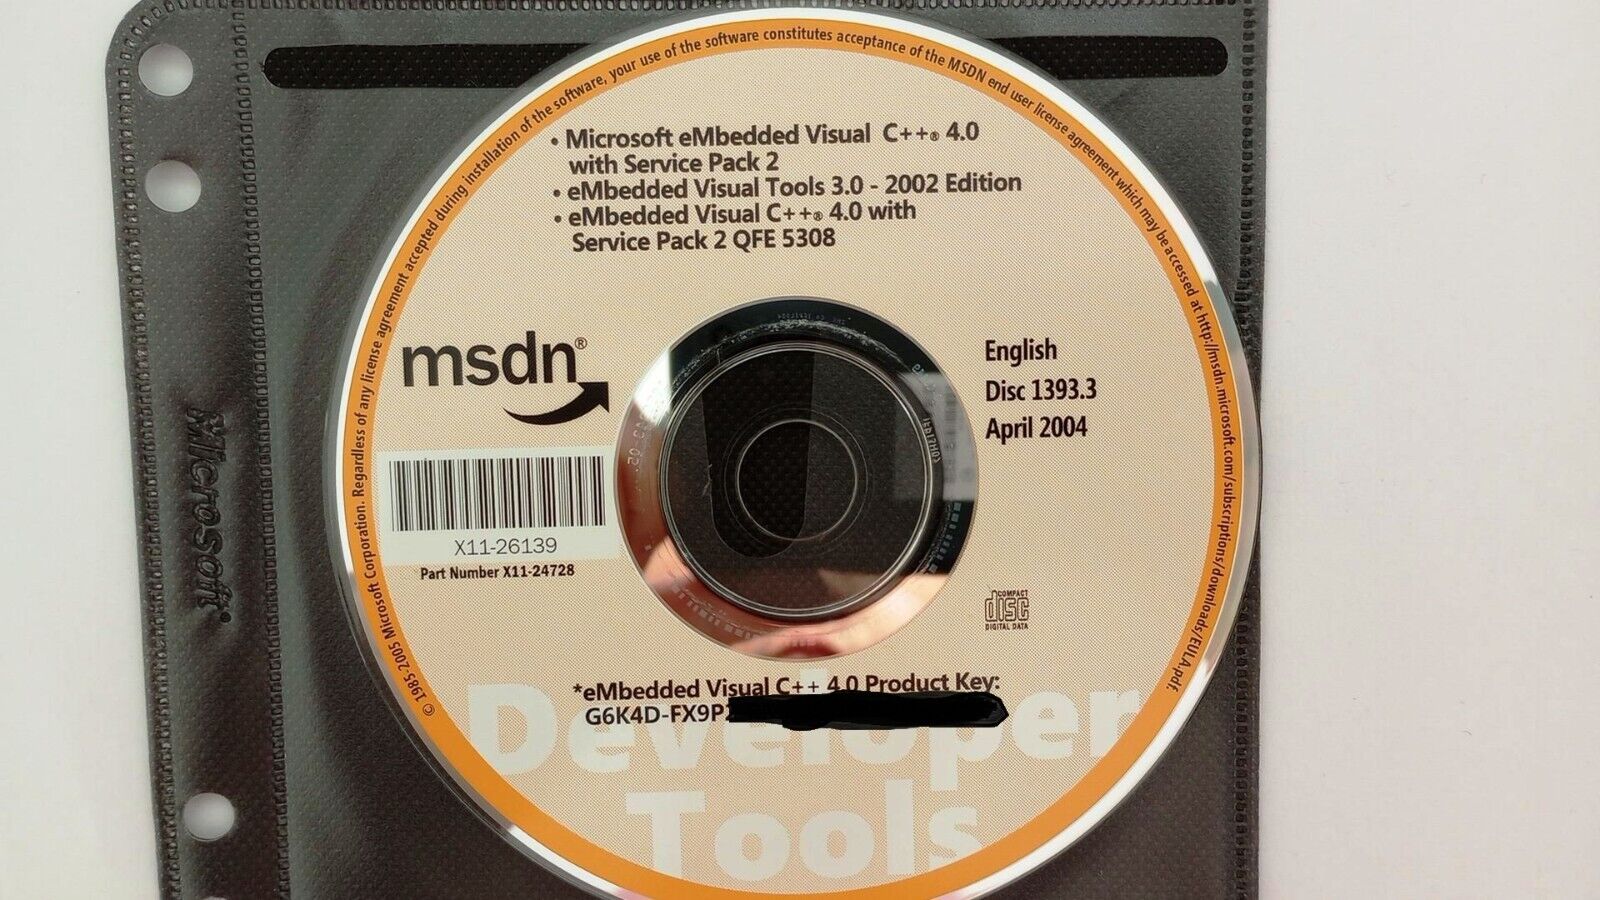 Microsoft eMbedded Visual C++ 4.0 w/ SP2 & eMbedded Visual Tools 3.0 w/ License